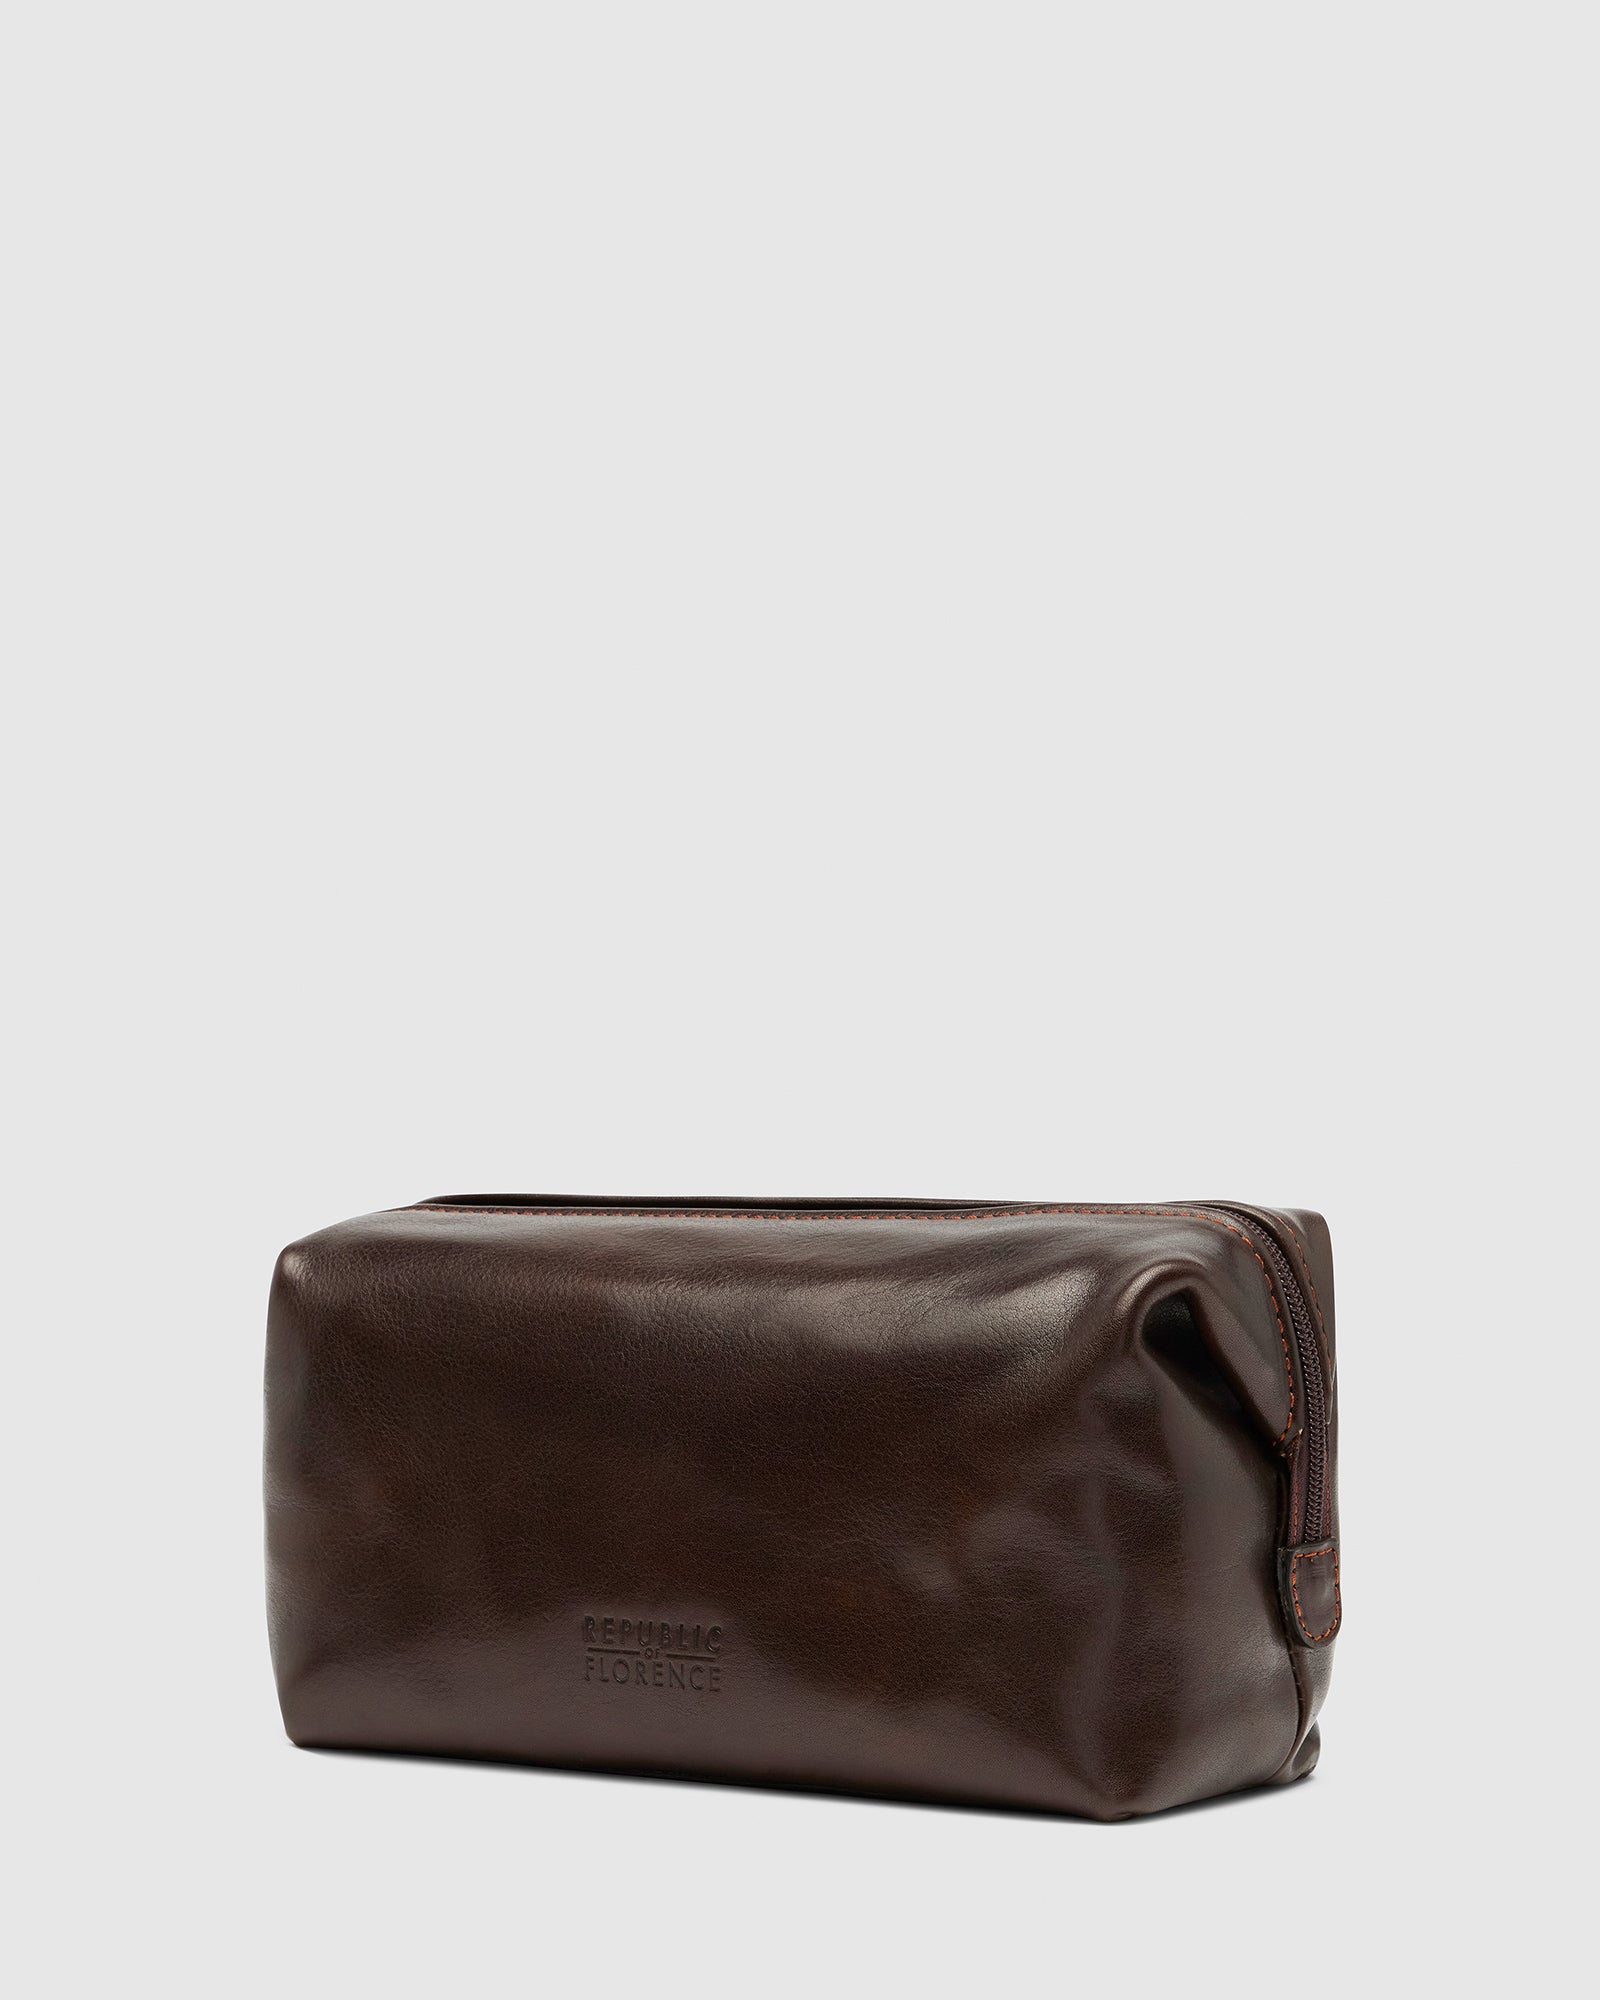 The Grand Dopp Kit Chocolate - toilet bag